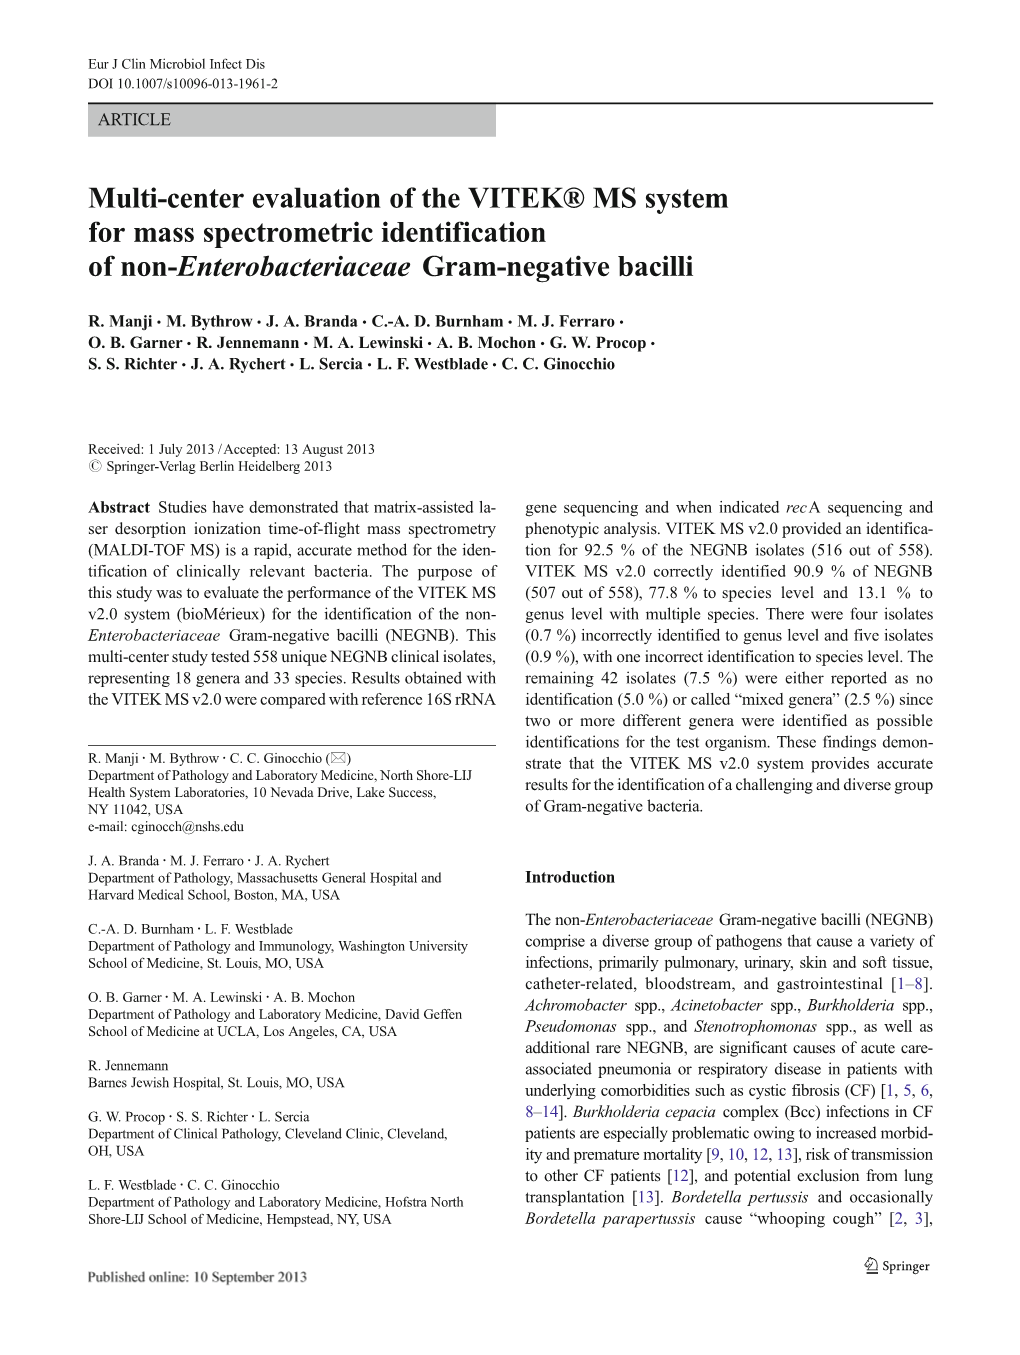 Multi-Center Evaluation of the VITEK® MS System for Mass Spectrometric Identification of Non-Enterobacteriaceae Gram-Negative Bacilli